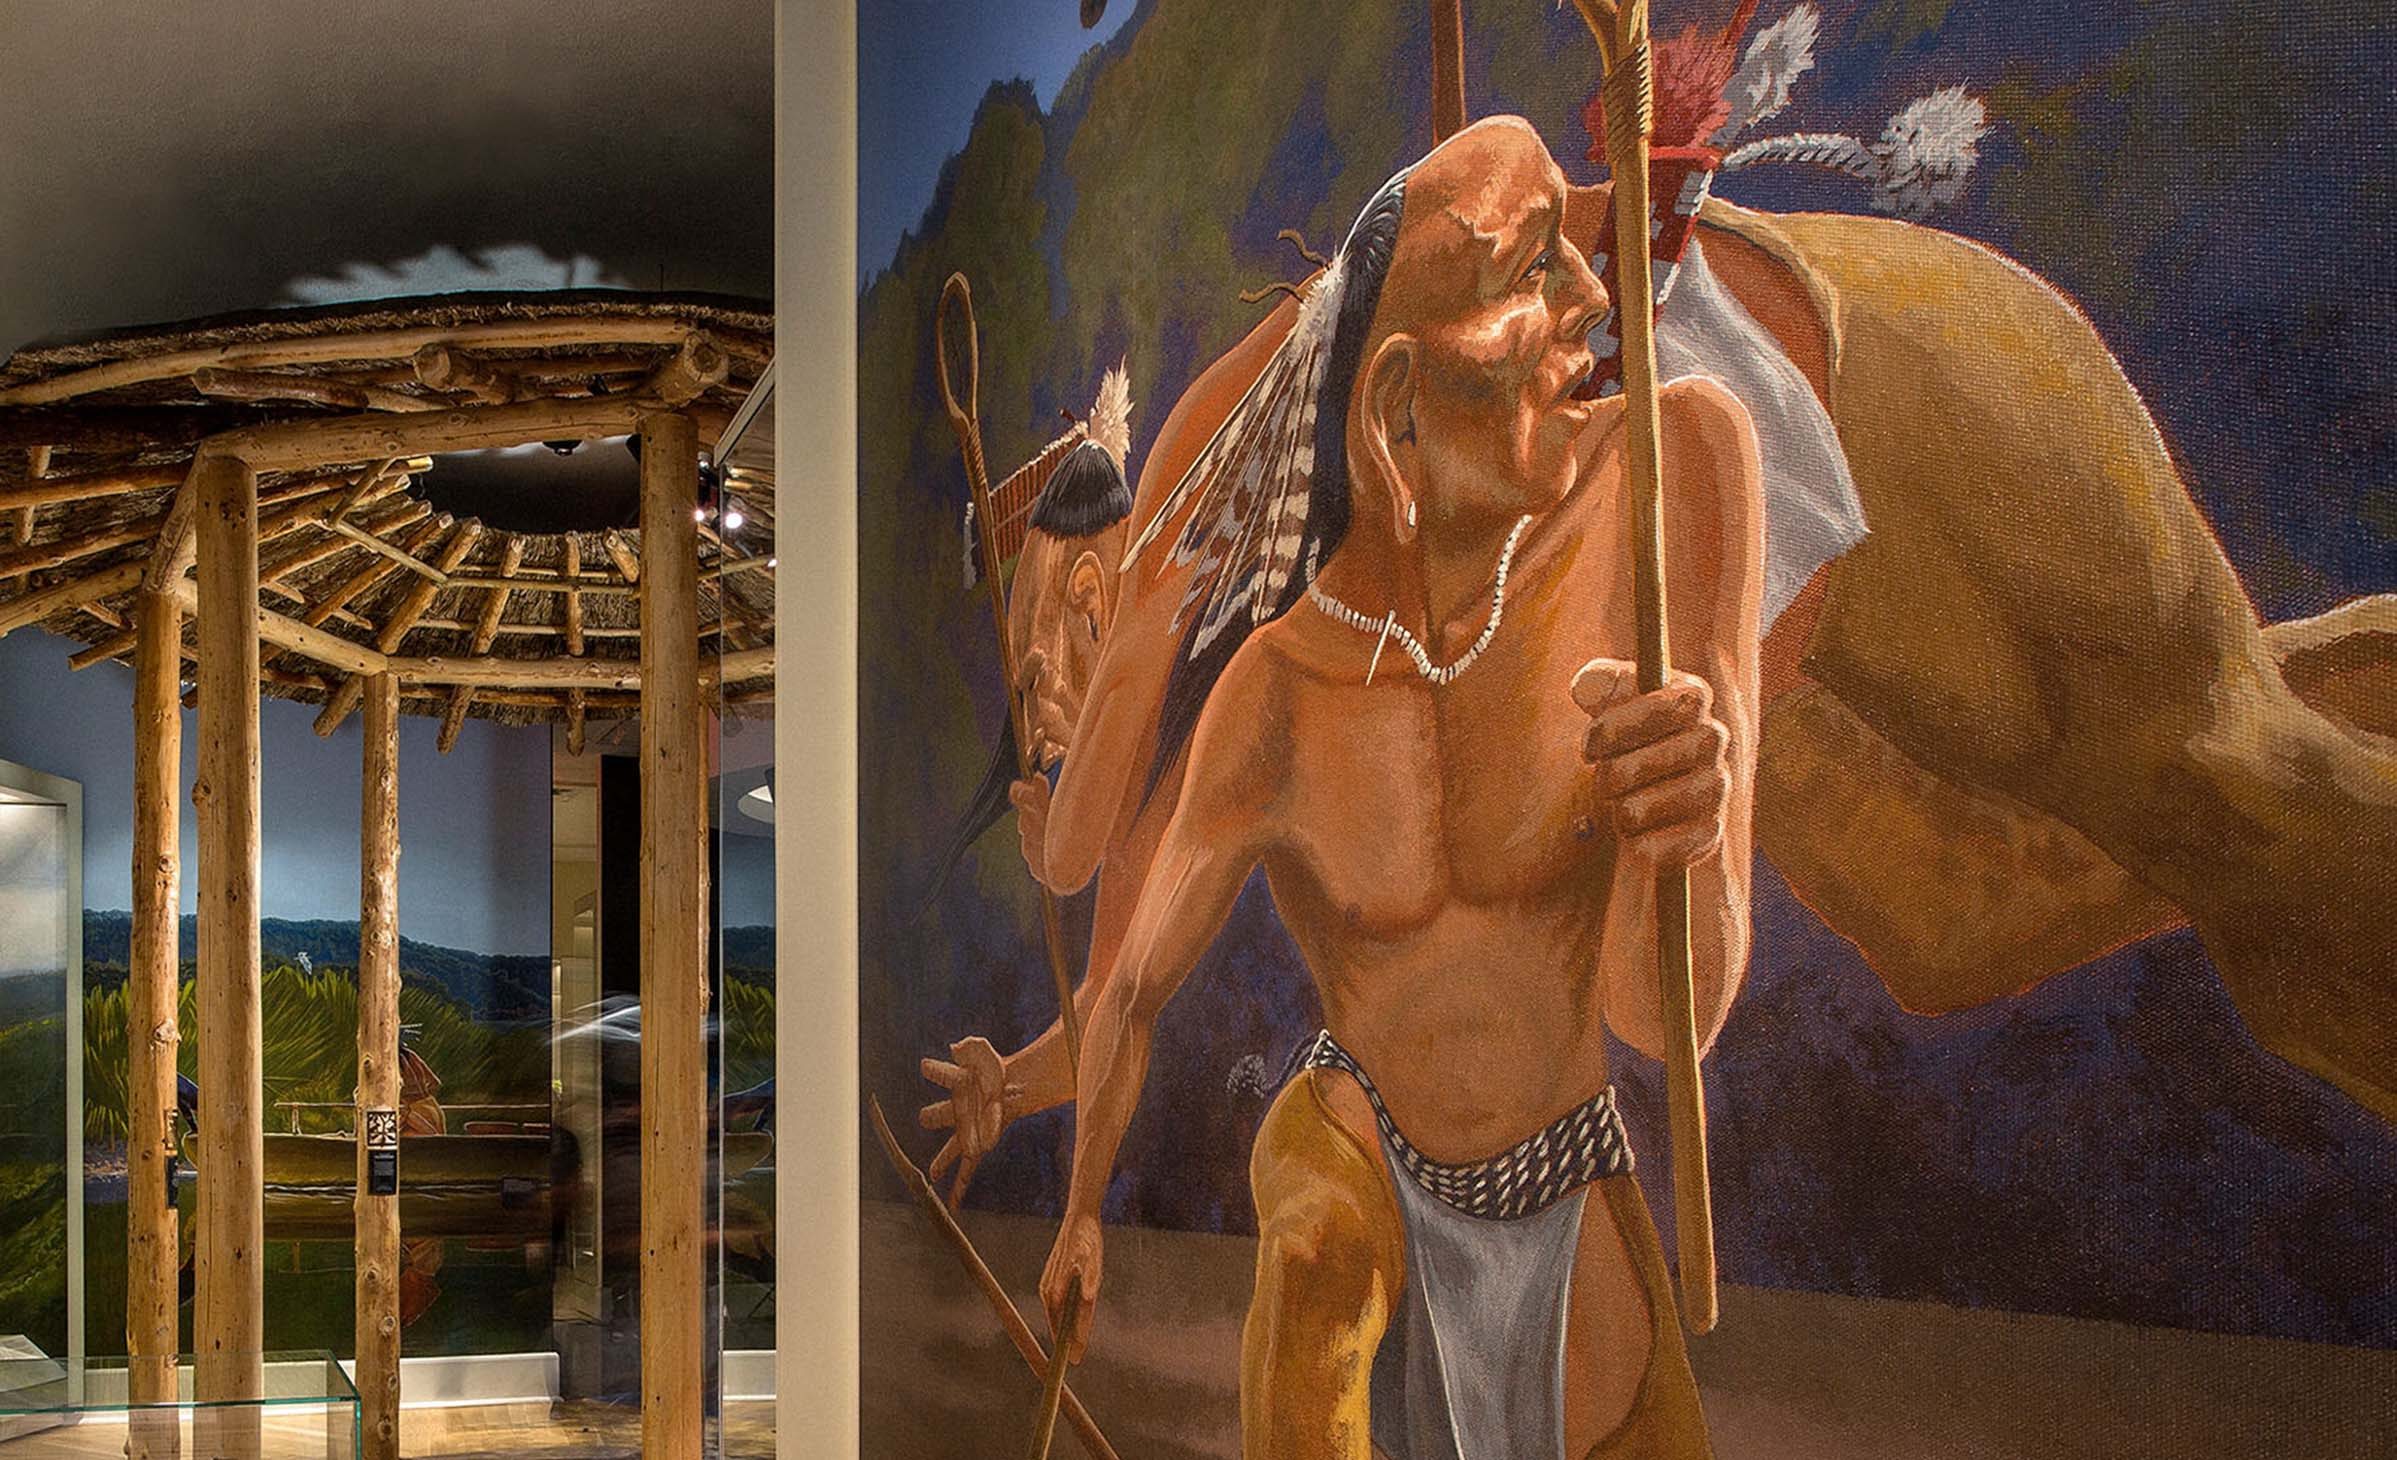 Cherokee Nation museum in Oklahoma.